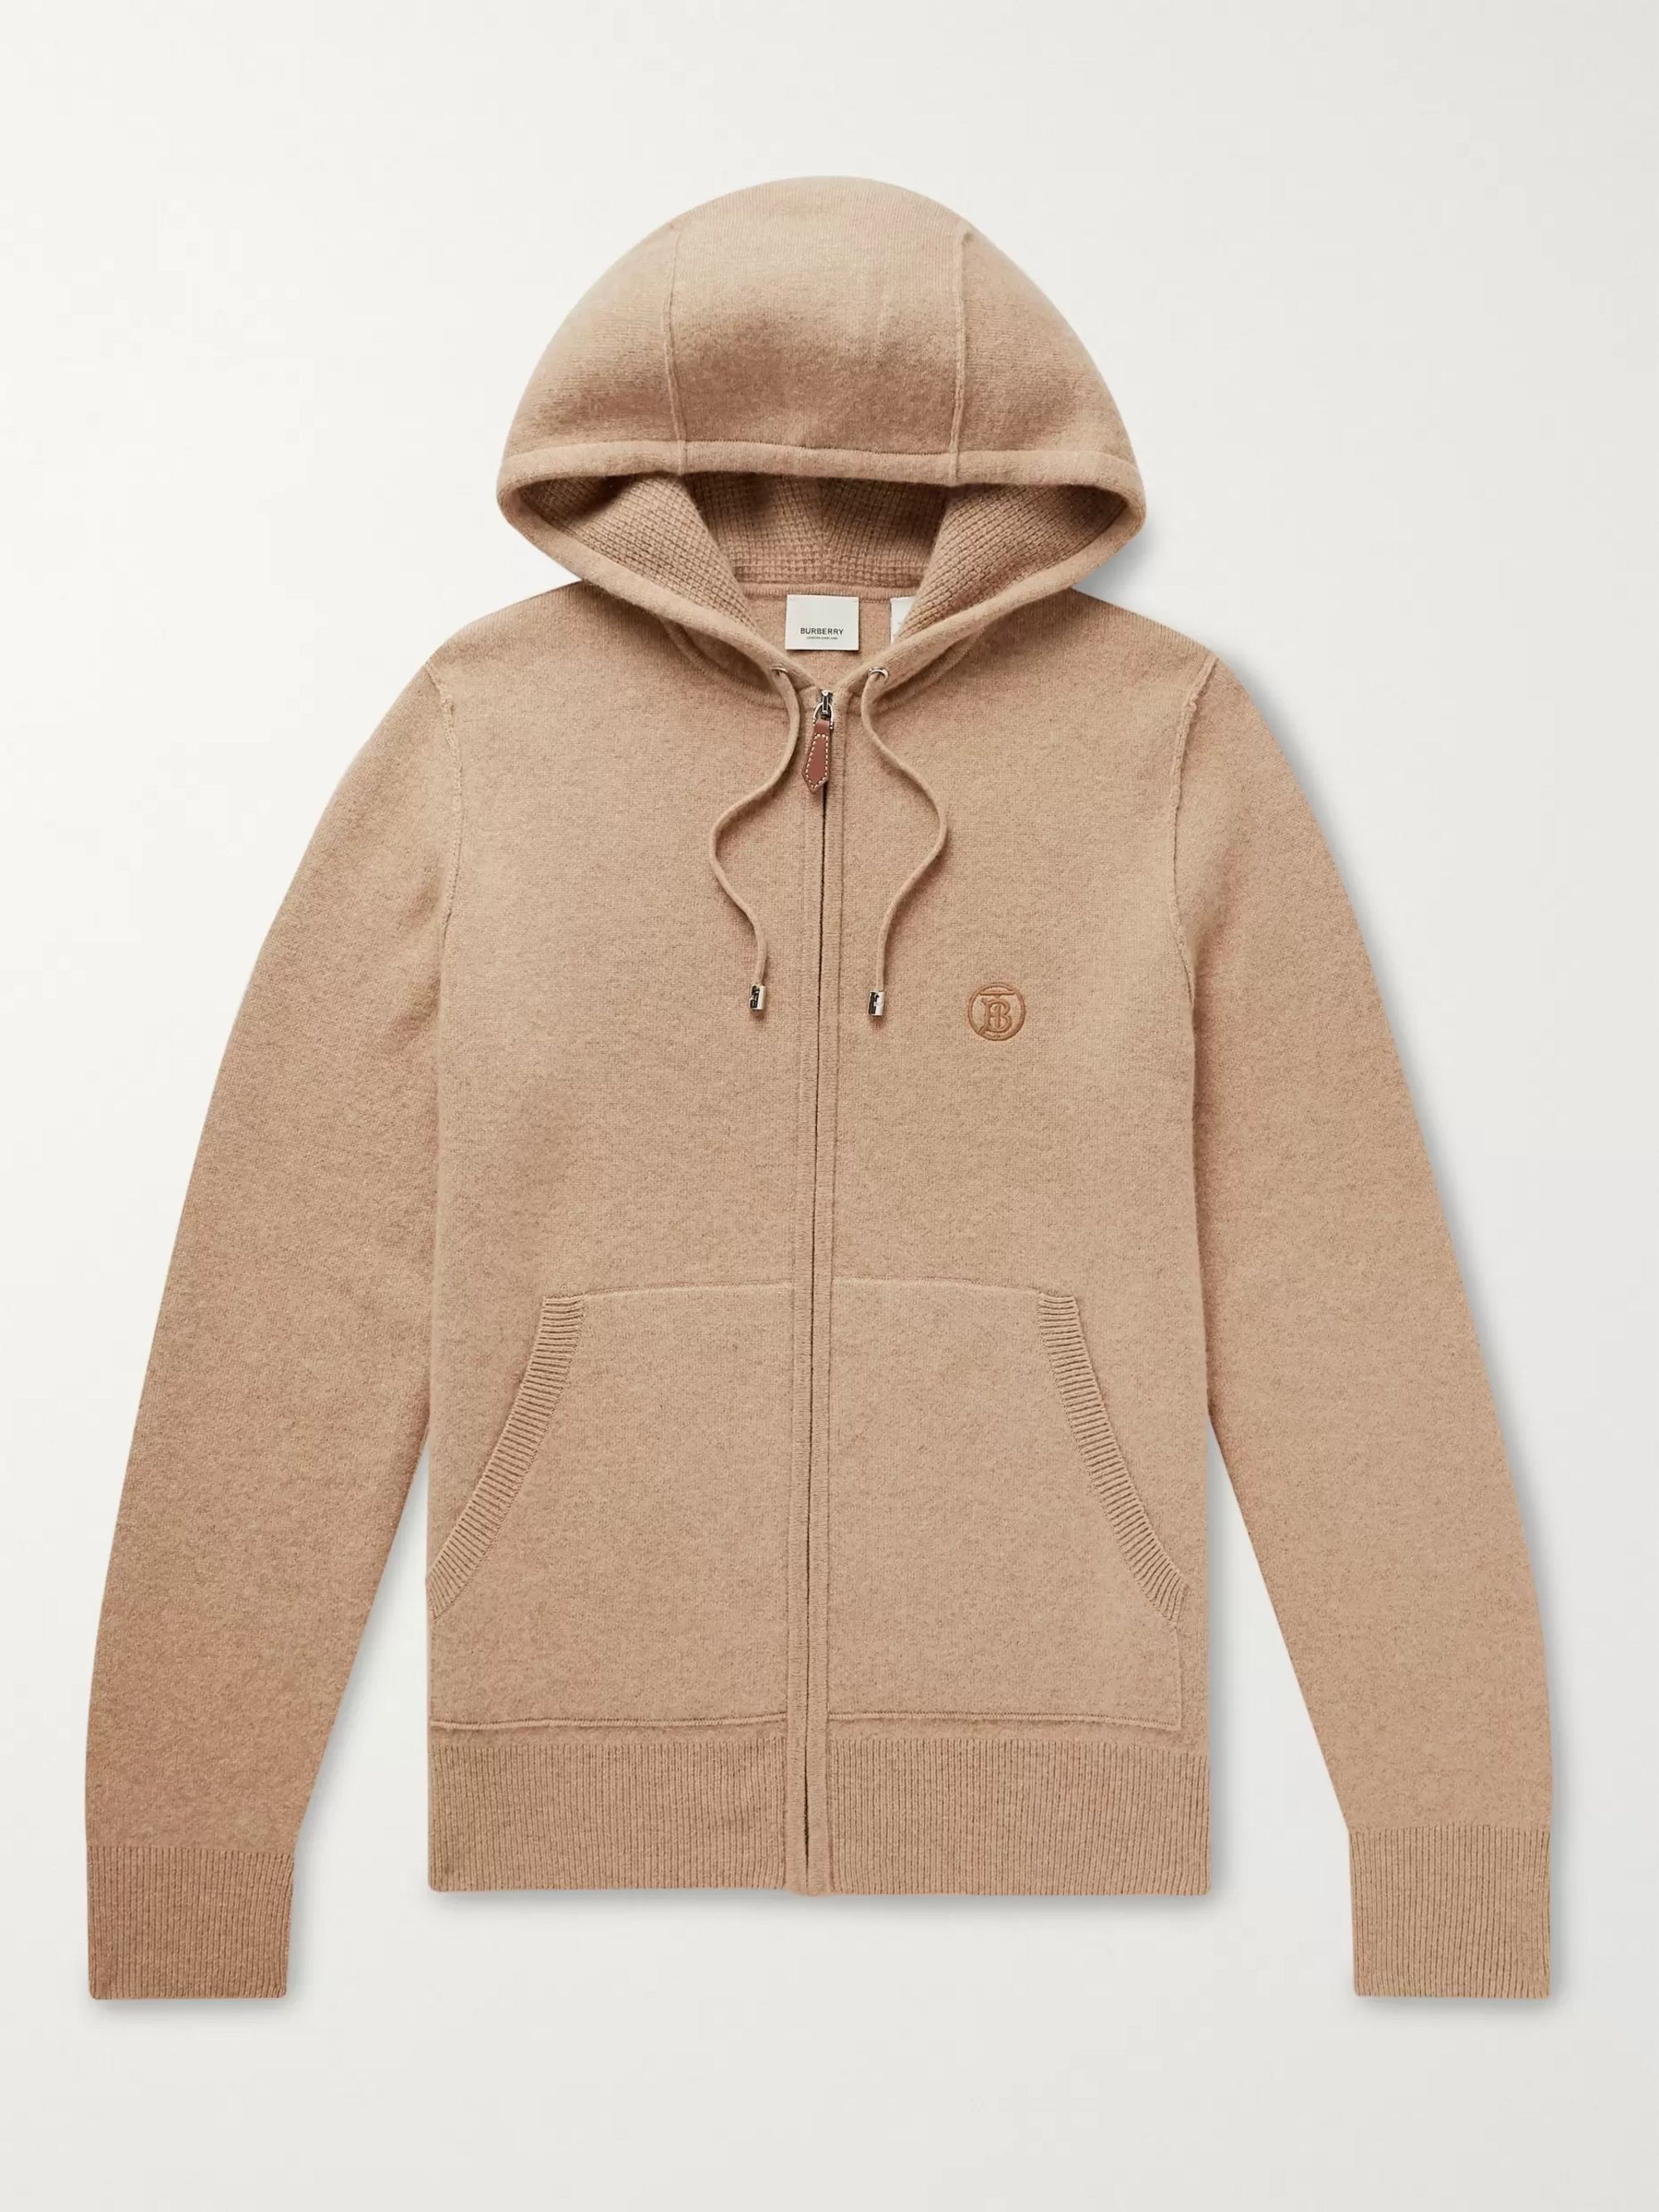 burberry zipped hoodie